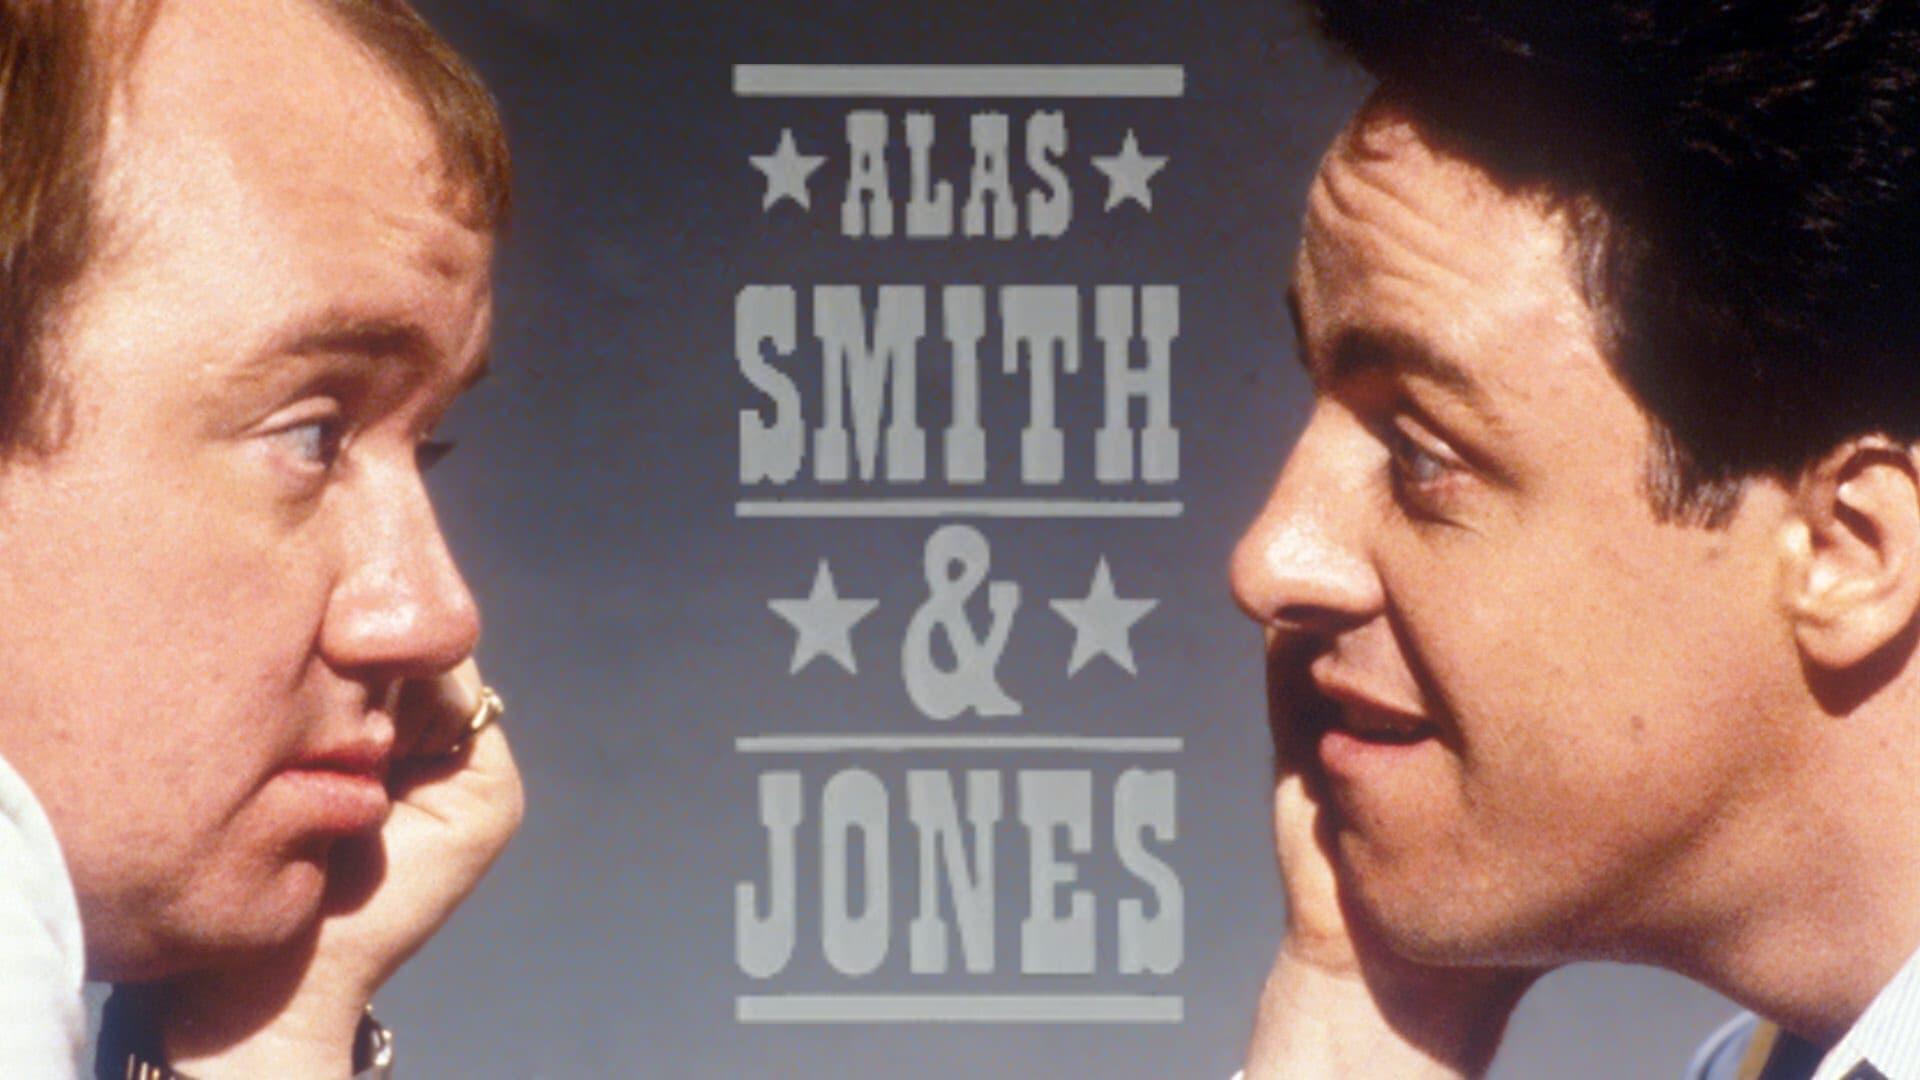 Alas Smith and Jones backdrop